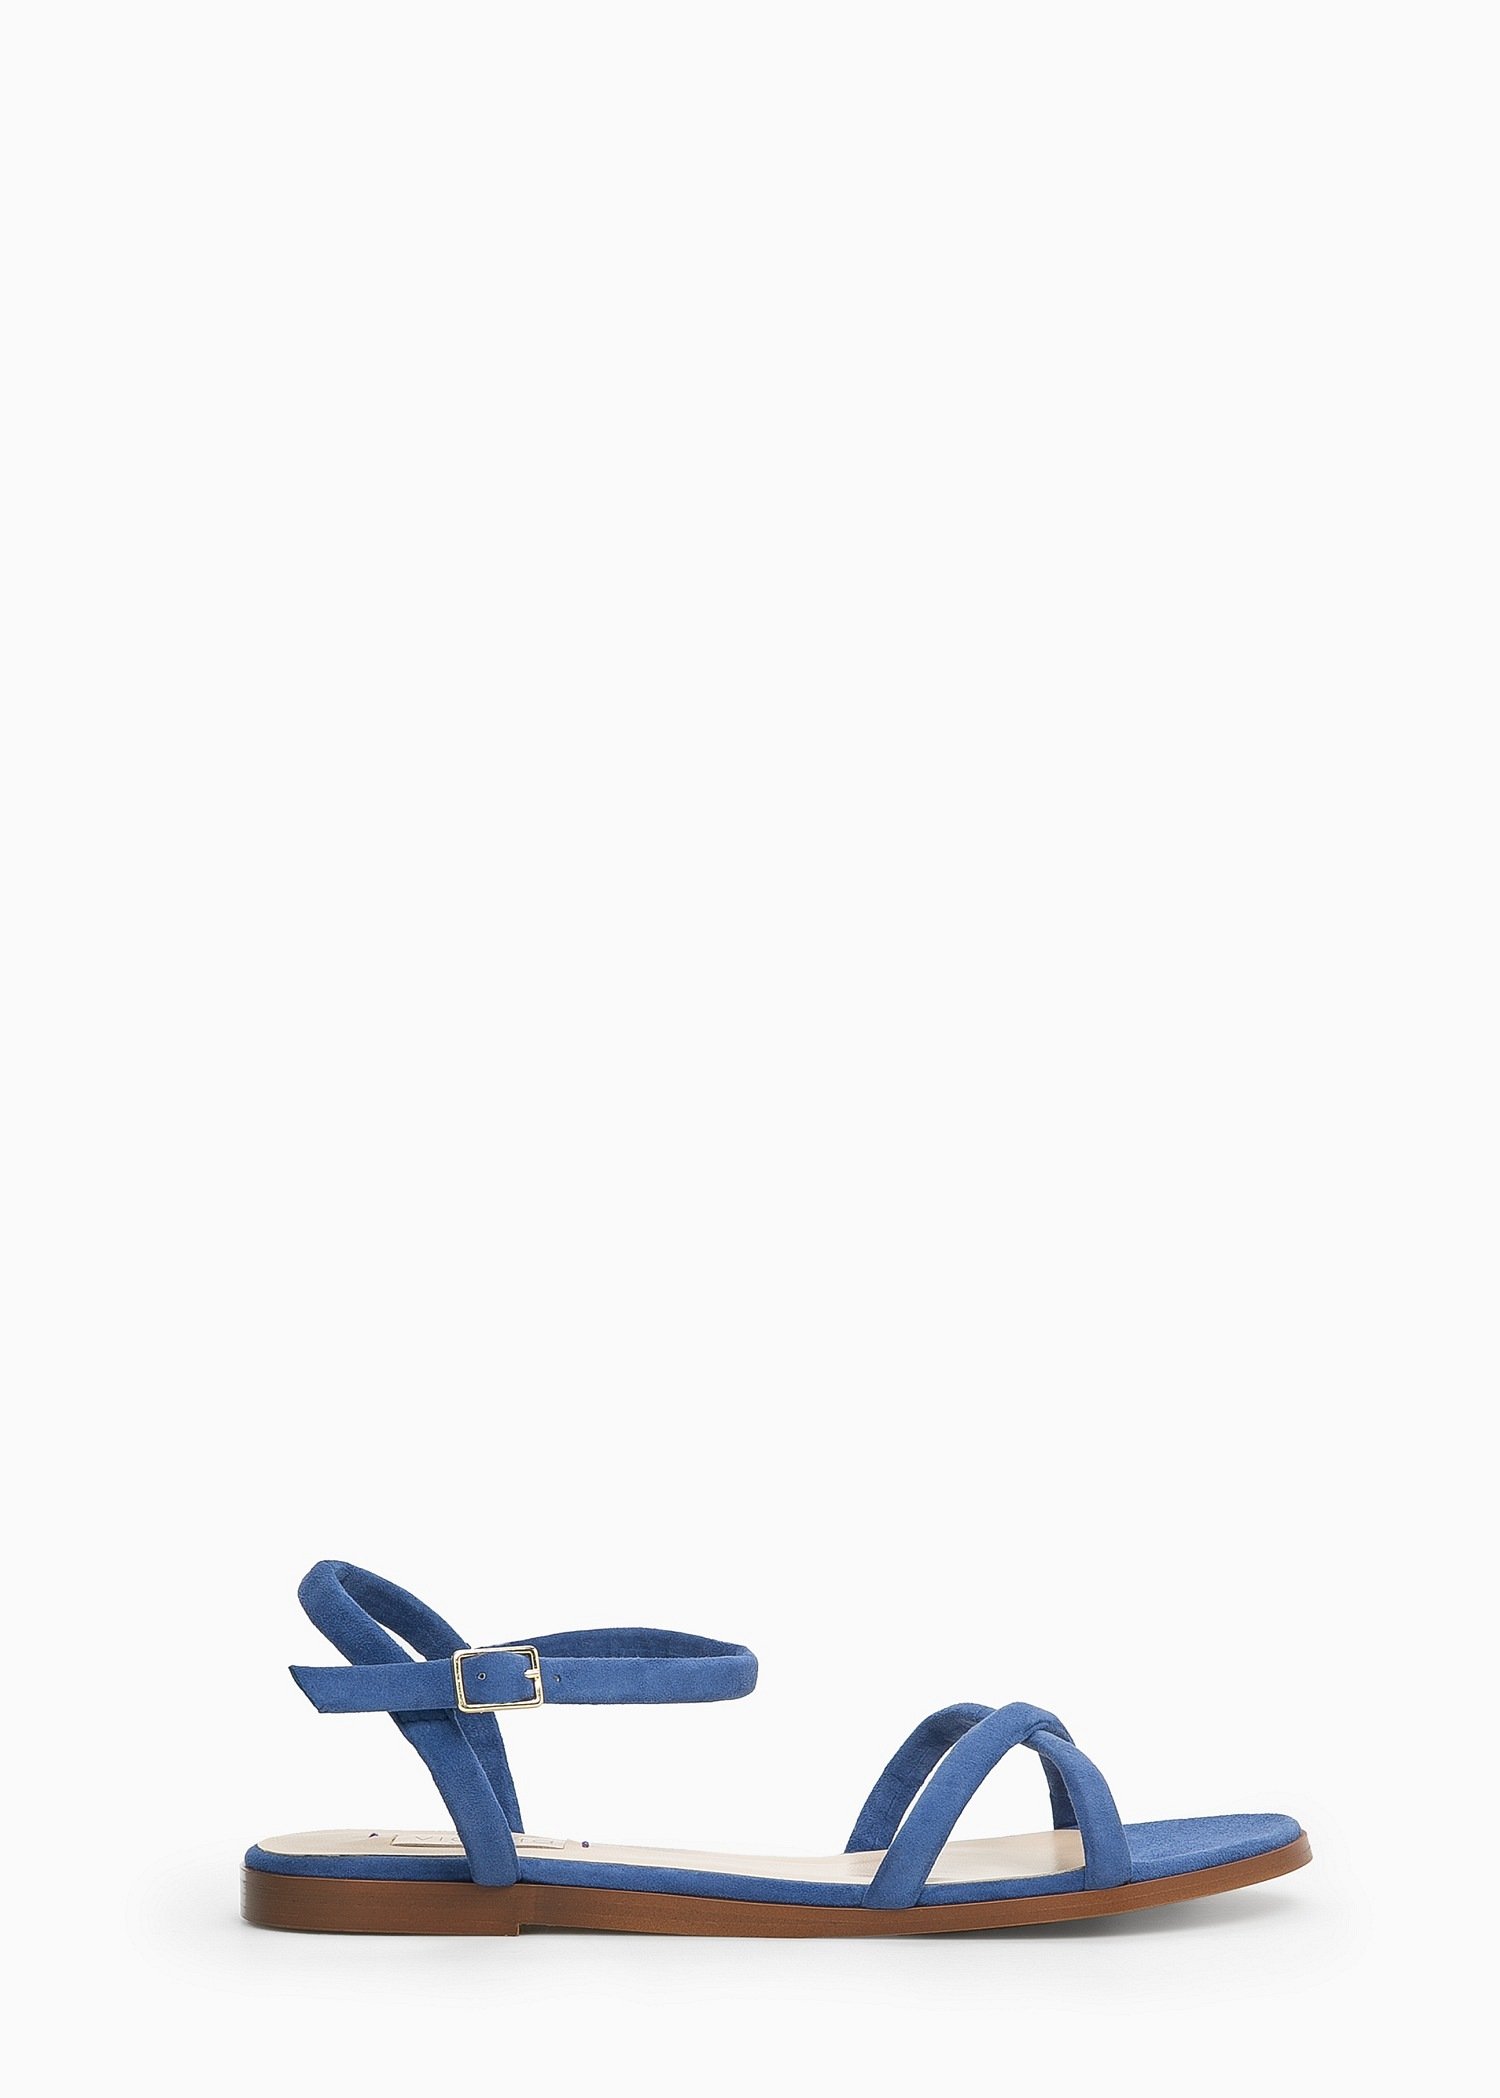 Lyst - Violeta by mango Suede Flat Sandals in Blue